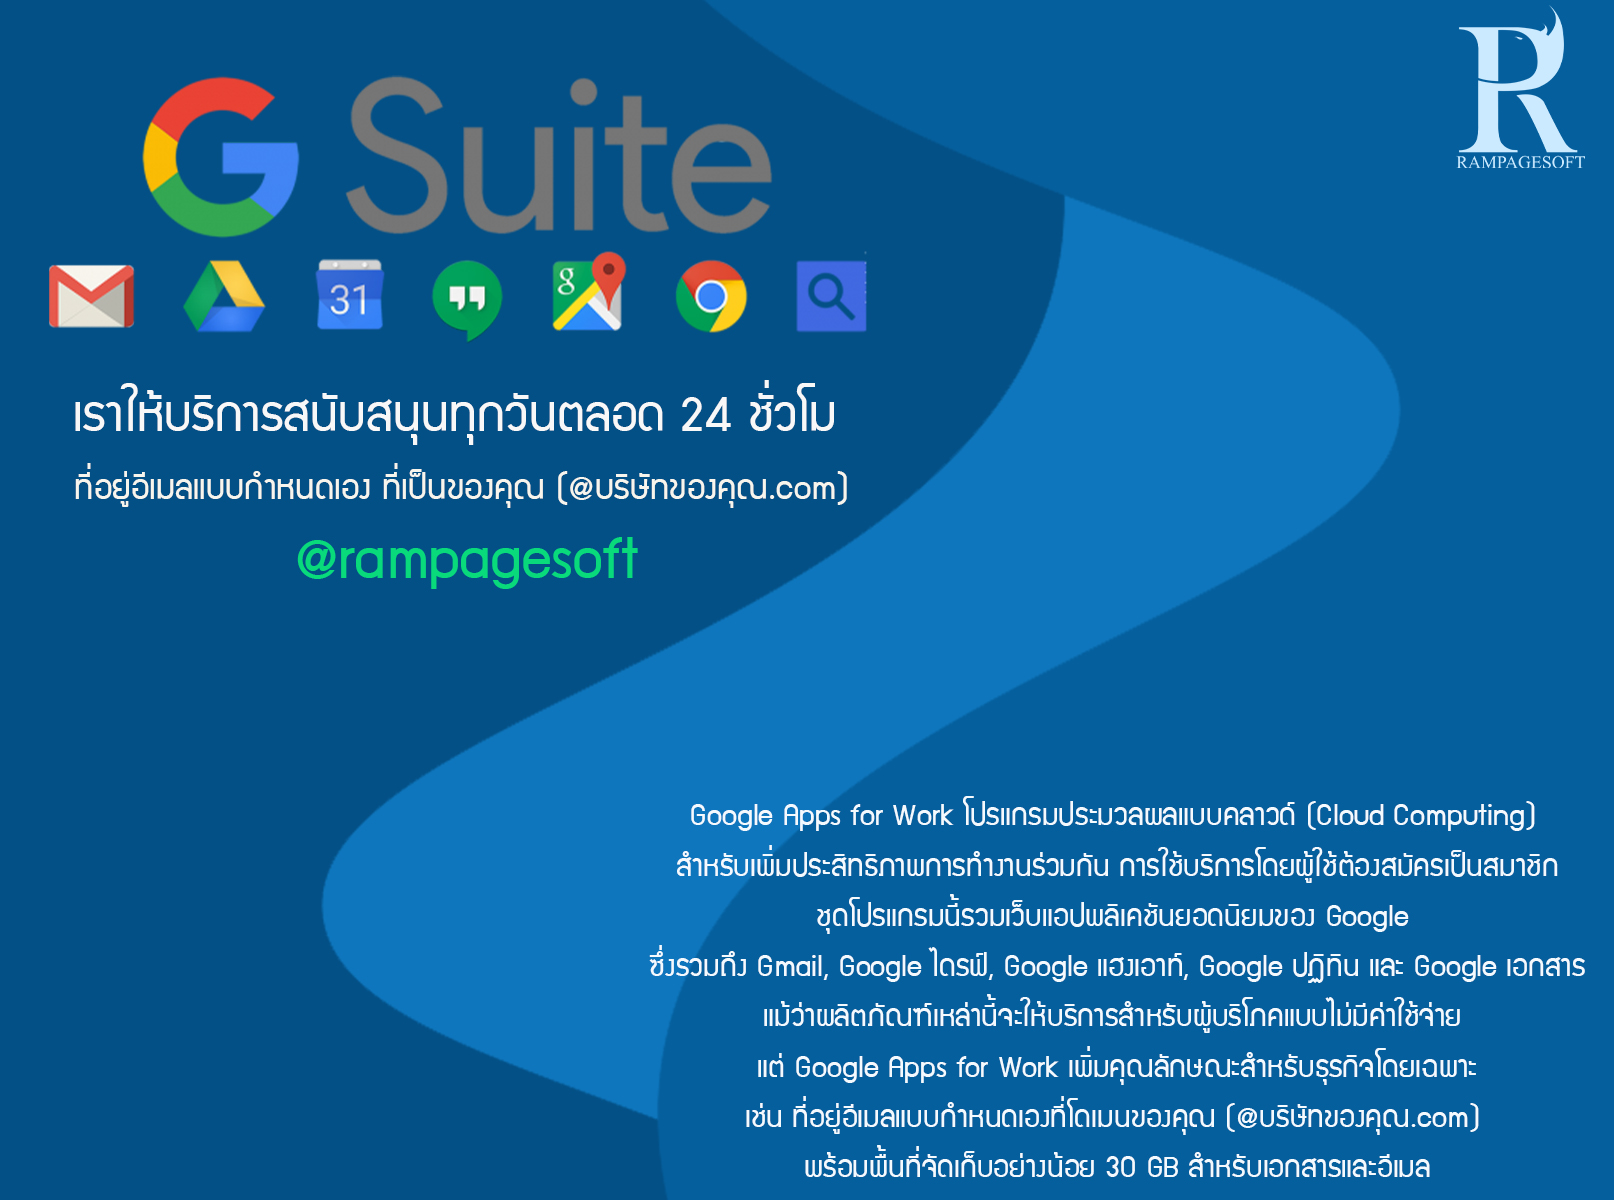 G-Suite ประกอบด้วยอีเมลธุรกิจของ Gmail, การพิมพ์งานด้วย Google เอกสาร บทความ ข่าวสาร rampagesoft